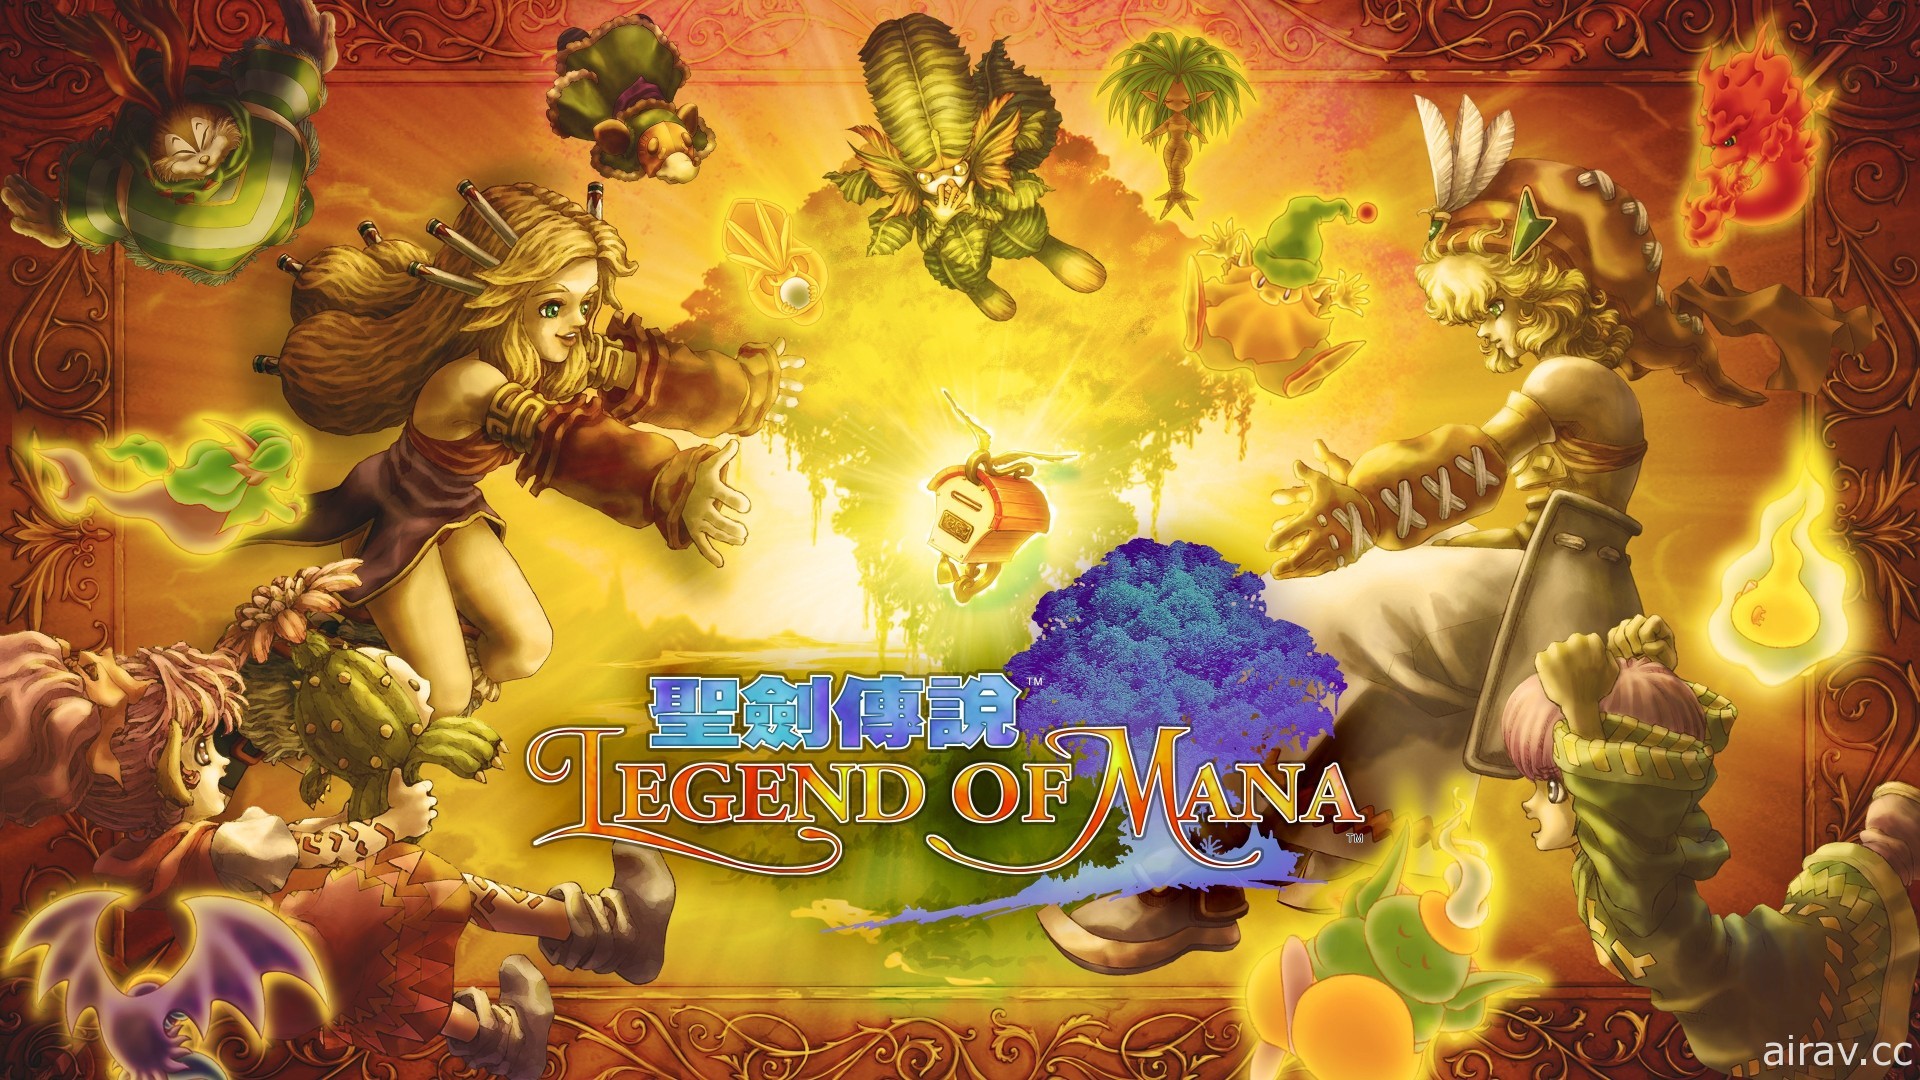 《聖劍傳說 Legend of Mana》HD Remaster 版 6 月 24 日登場